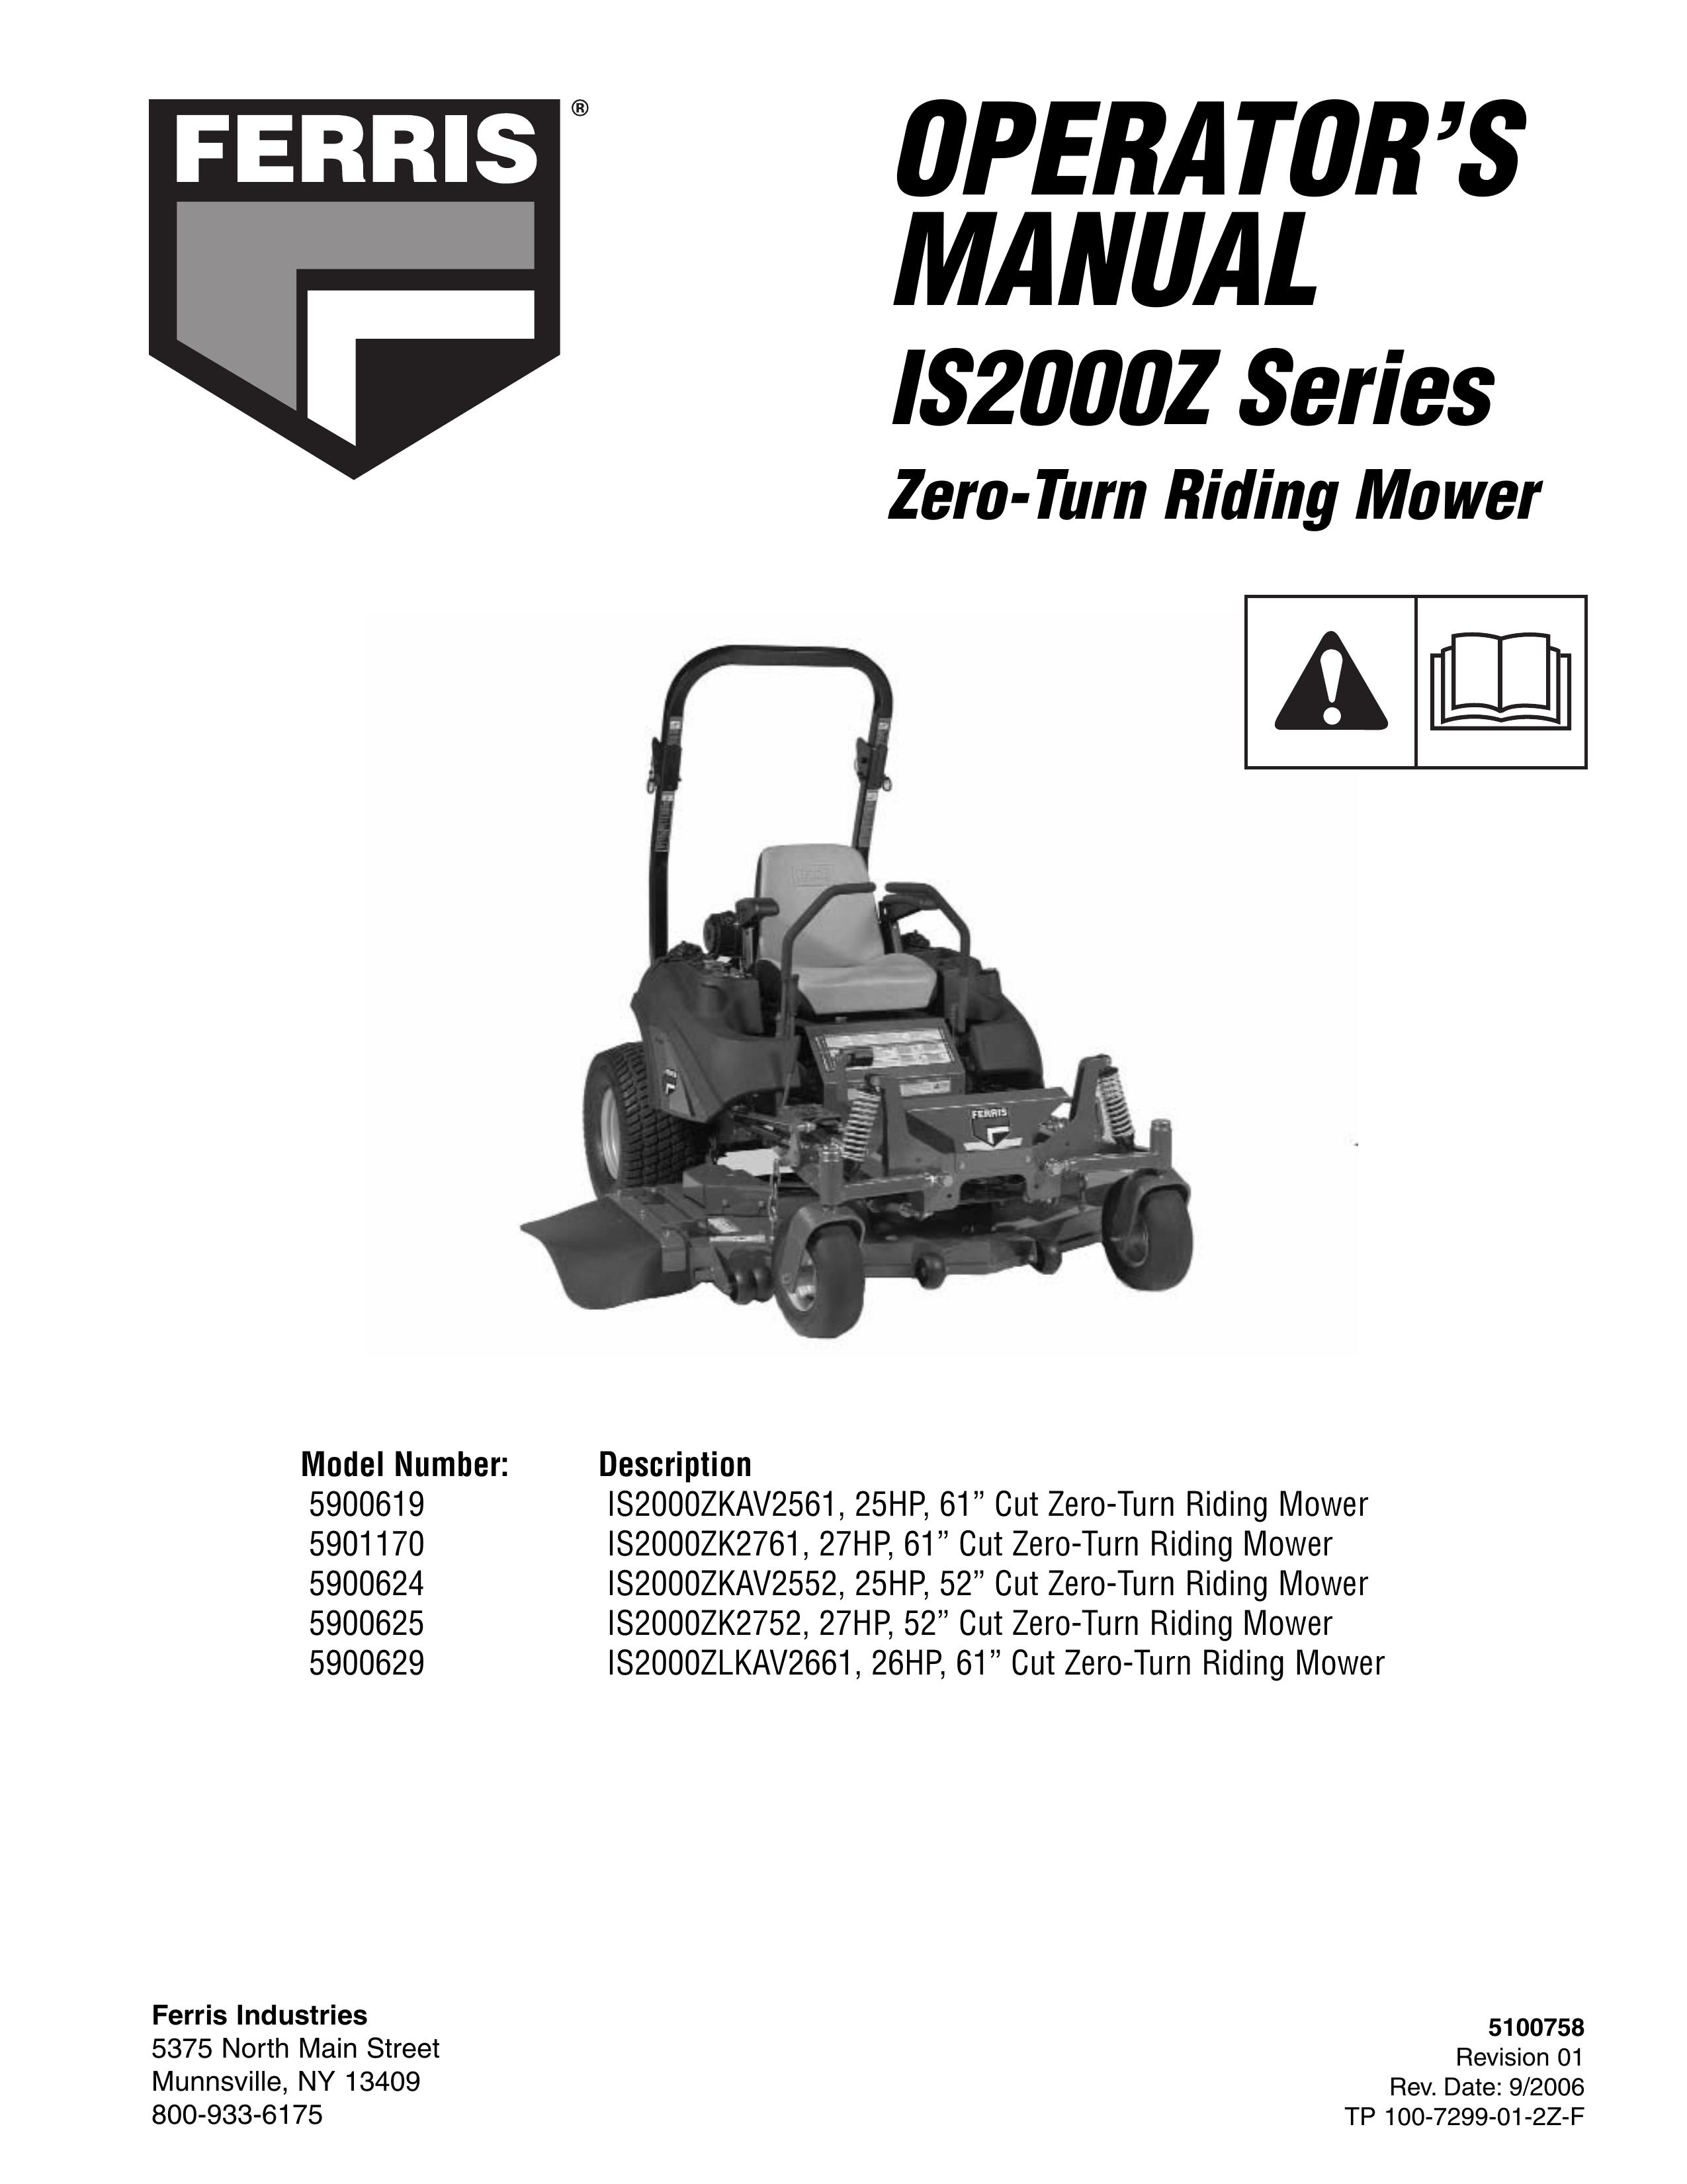 Ferris Industries 5900625 Lawn Mower User Manual